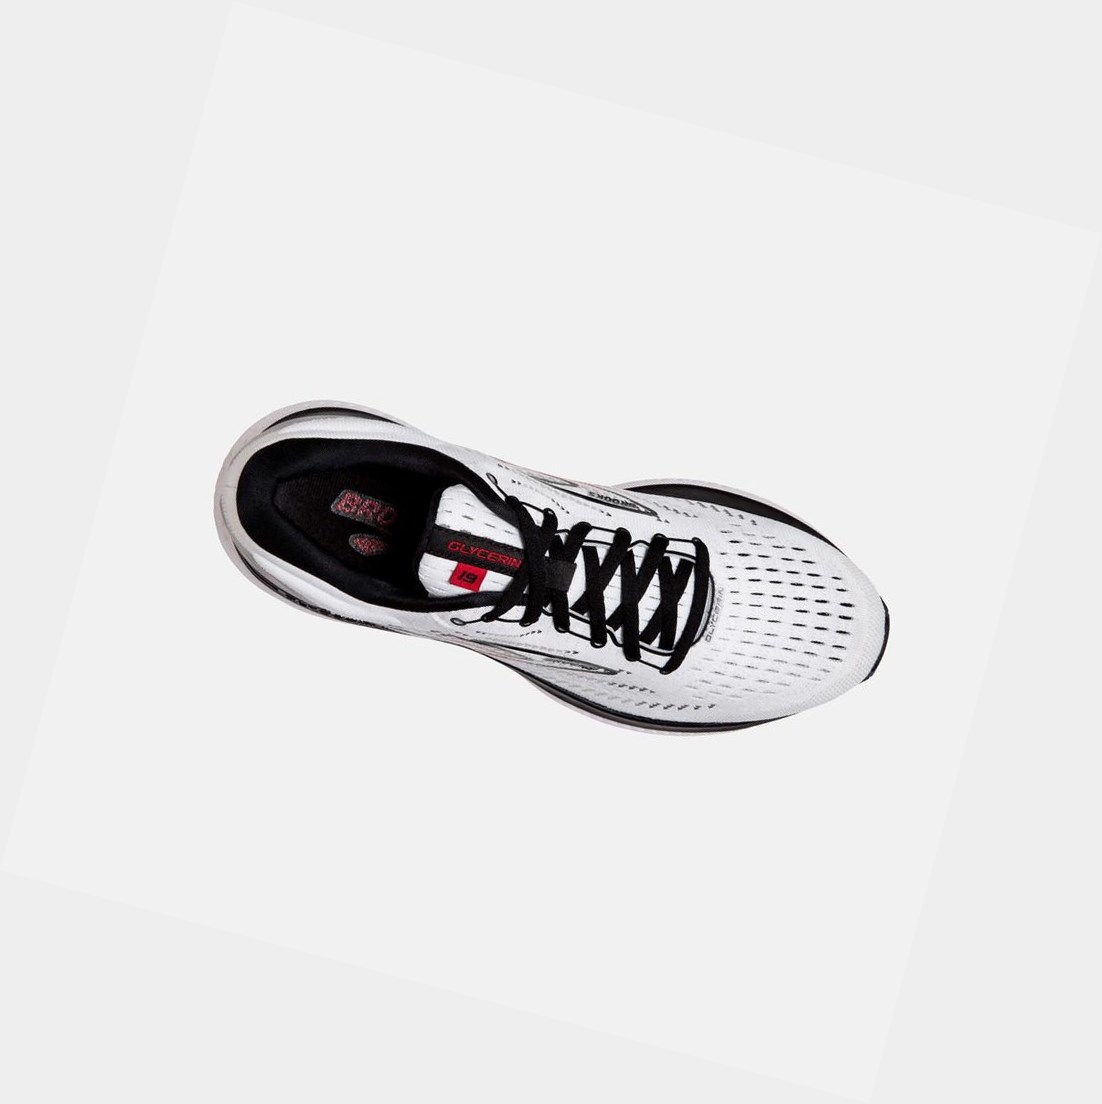 Brooks Glycerin 19 Men's Road Running Shoes White / Black / Red | APMZ-20154